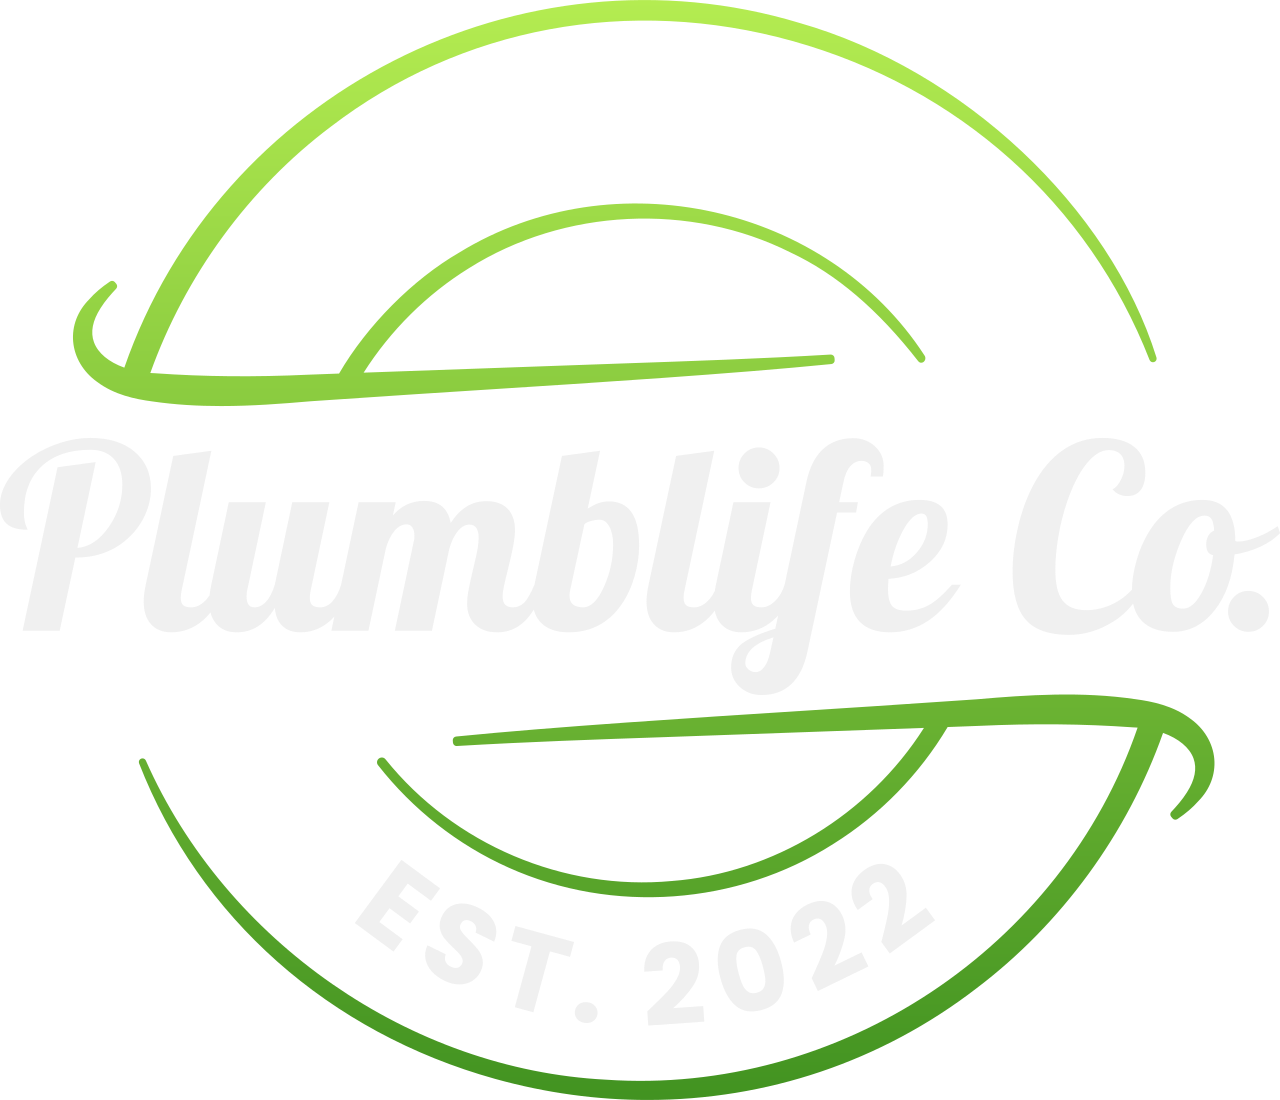 Plumblife Co.'s web page